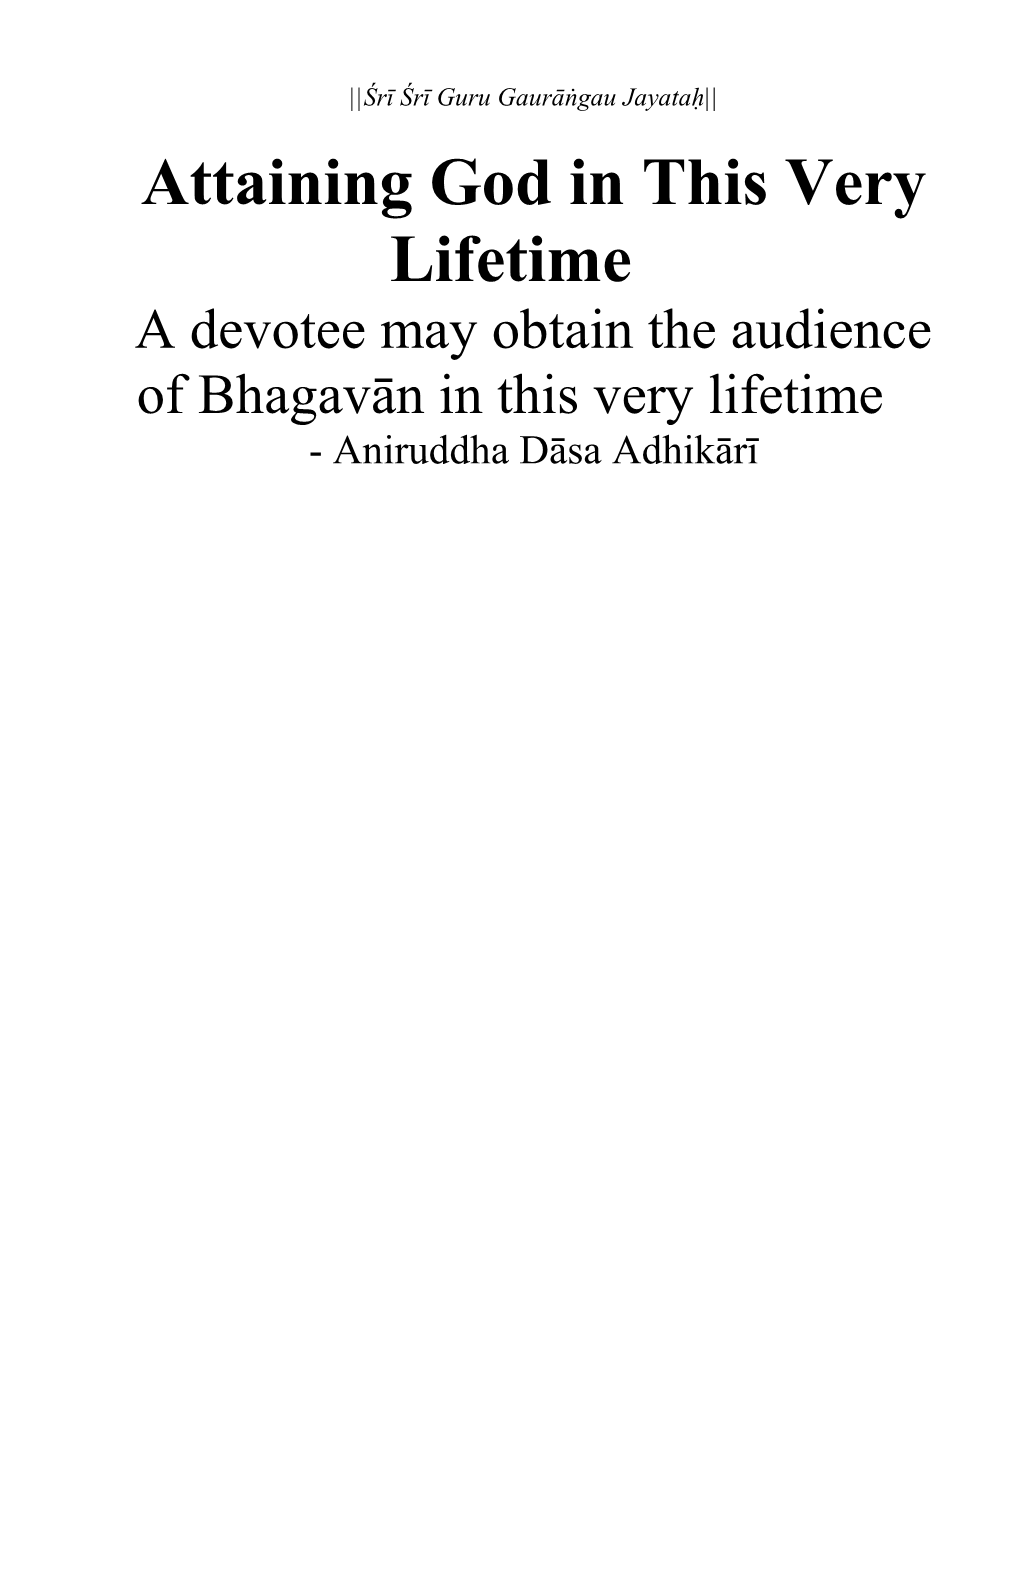 Attaining God in This Very Lifetime a Devotee May Obtain the Audience of Bhagavān in This Very Lifetime - Aniruddha Dāsa Adhikārī